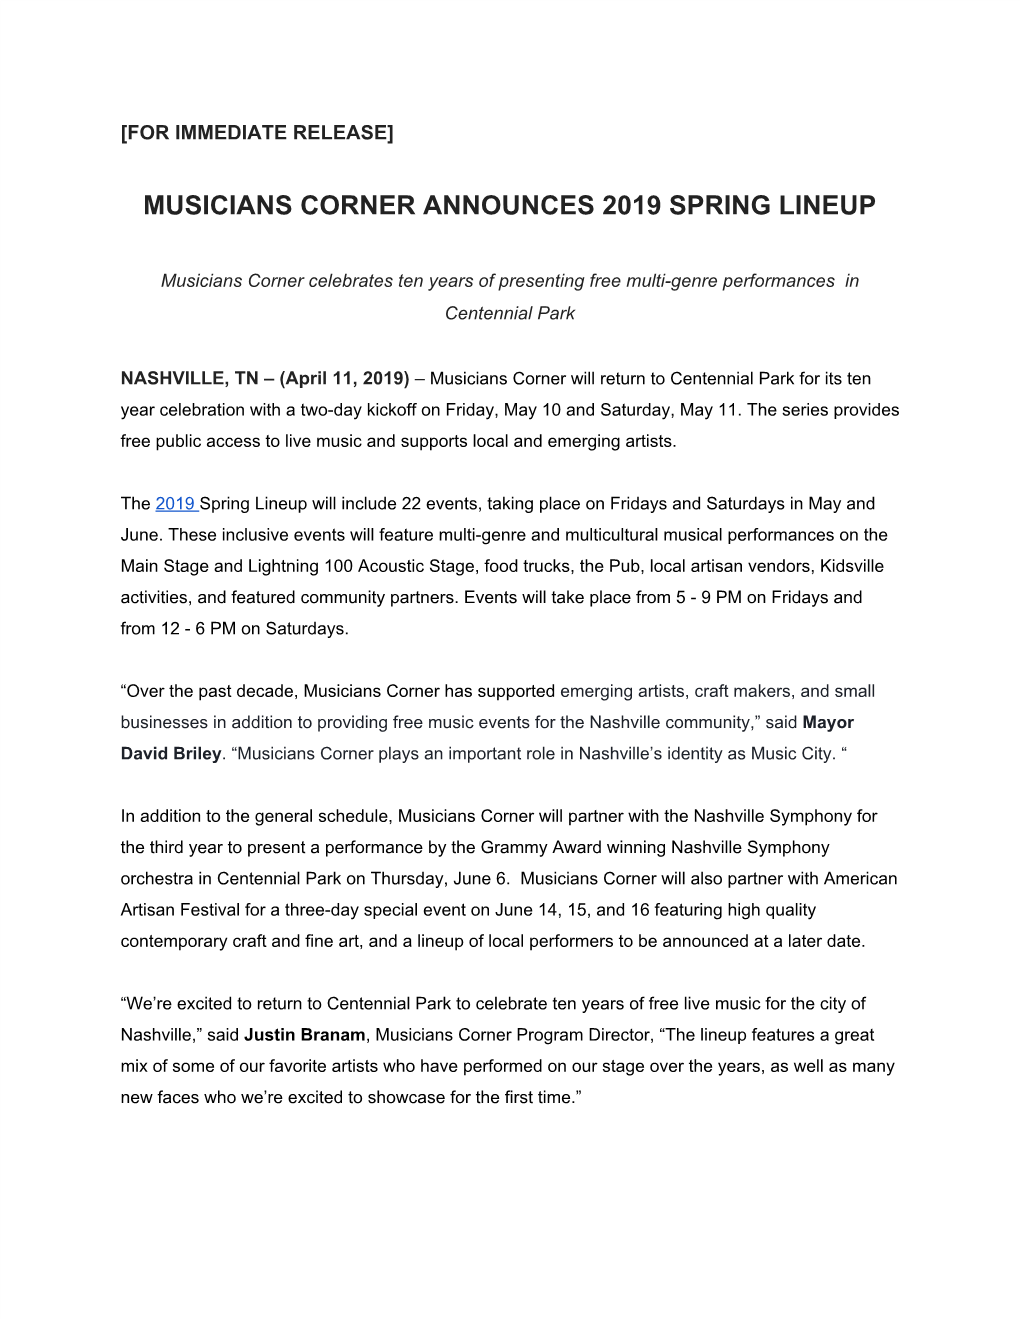 Musicians Corner Announces 2019 Spring Lineup